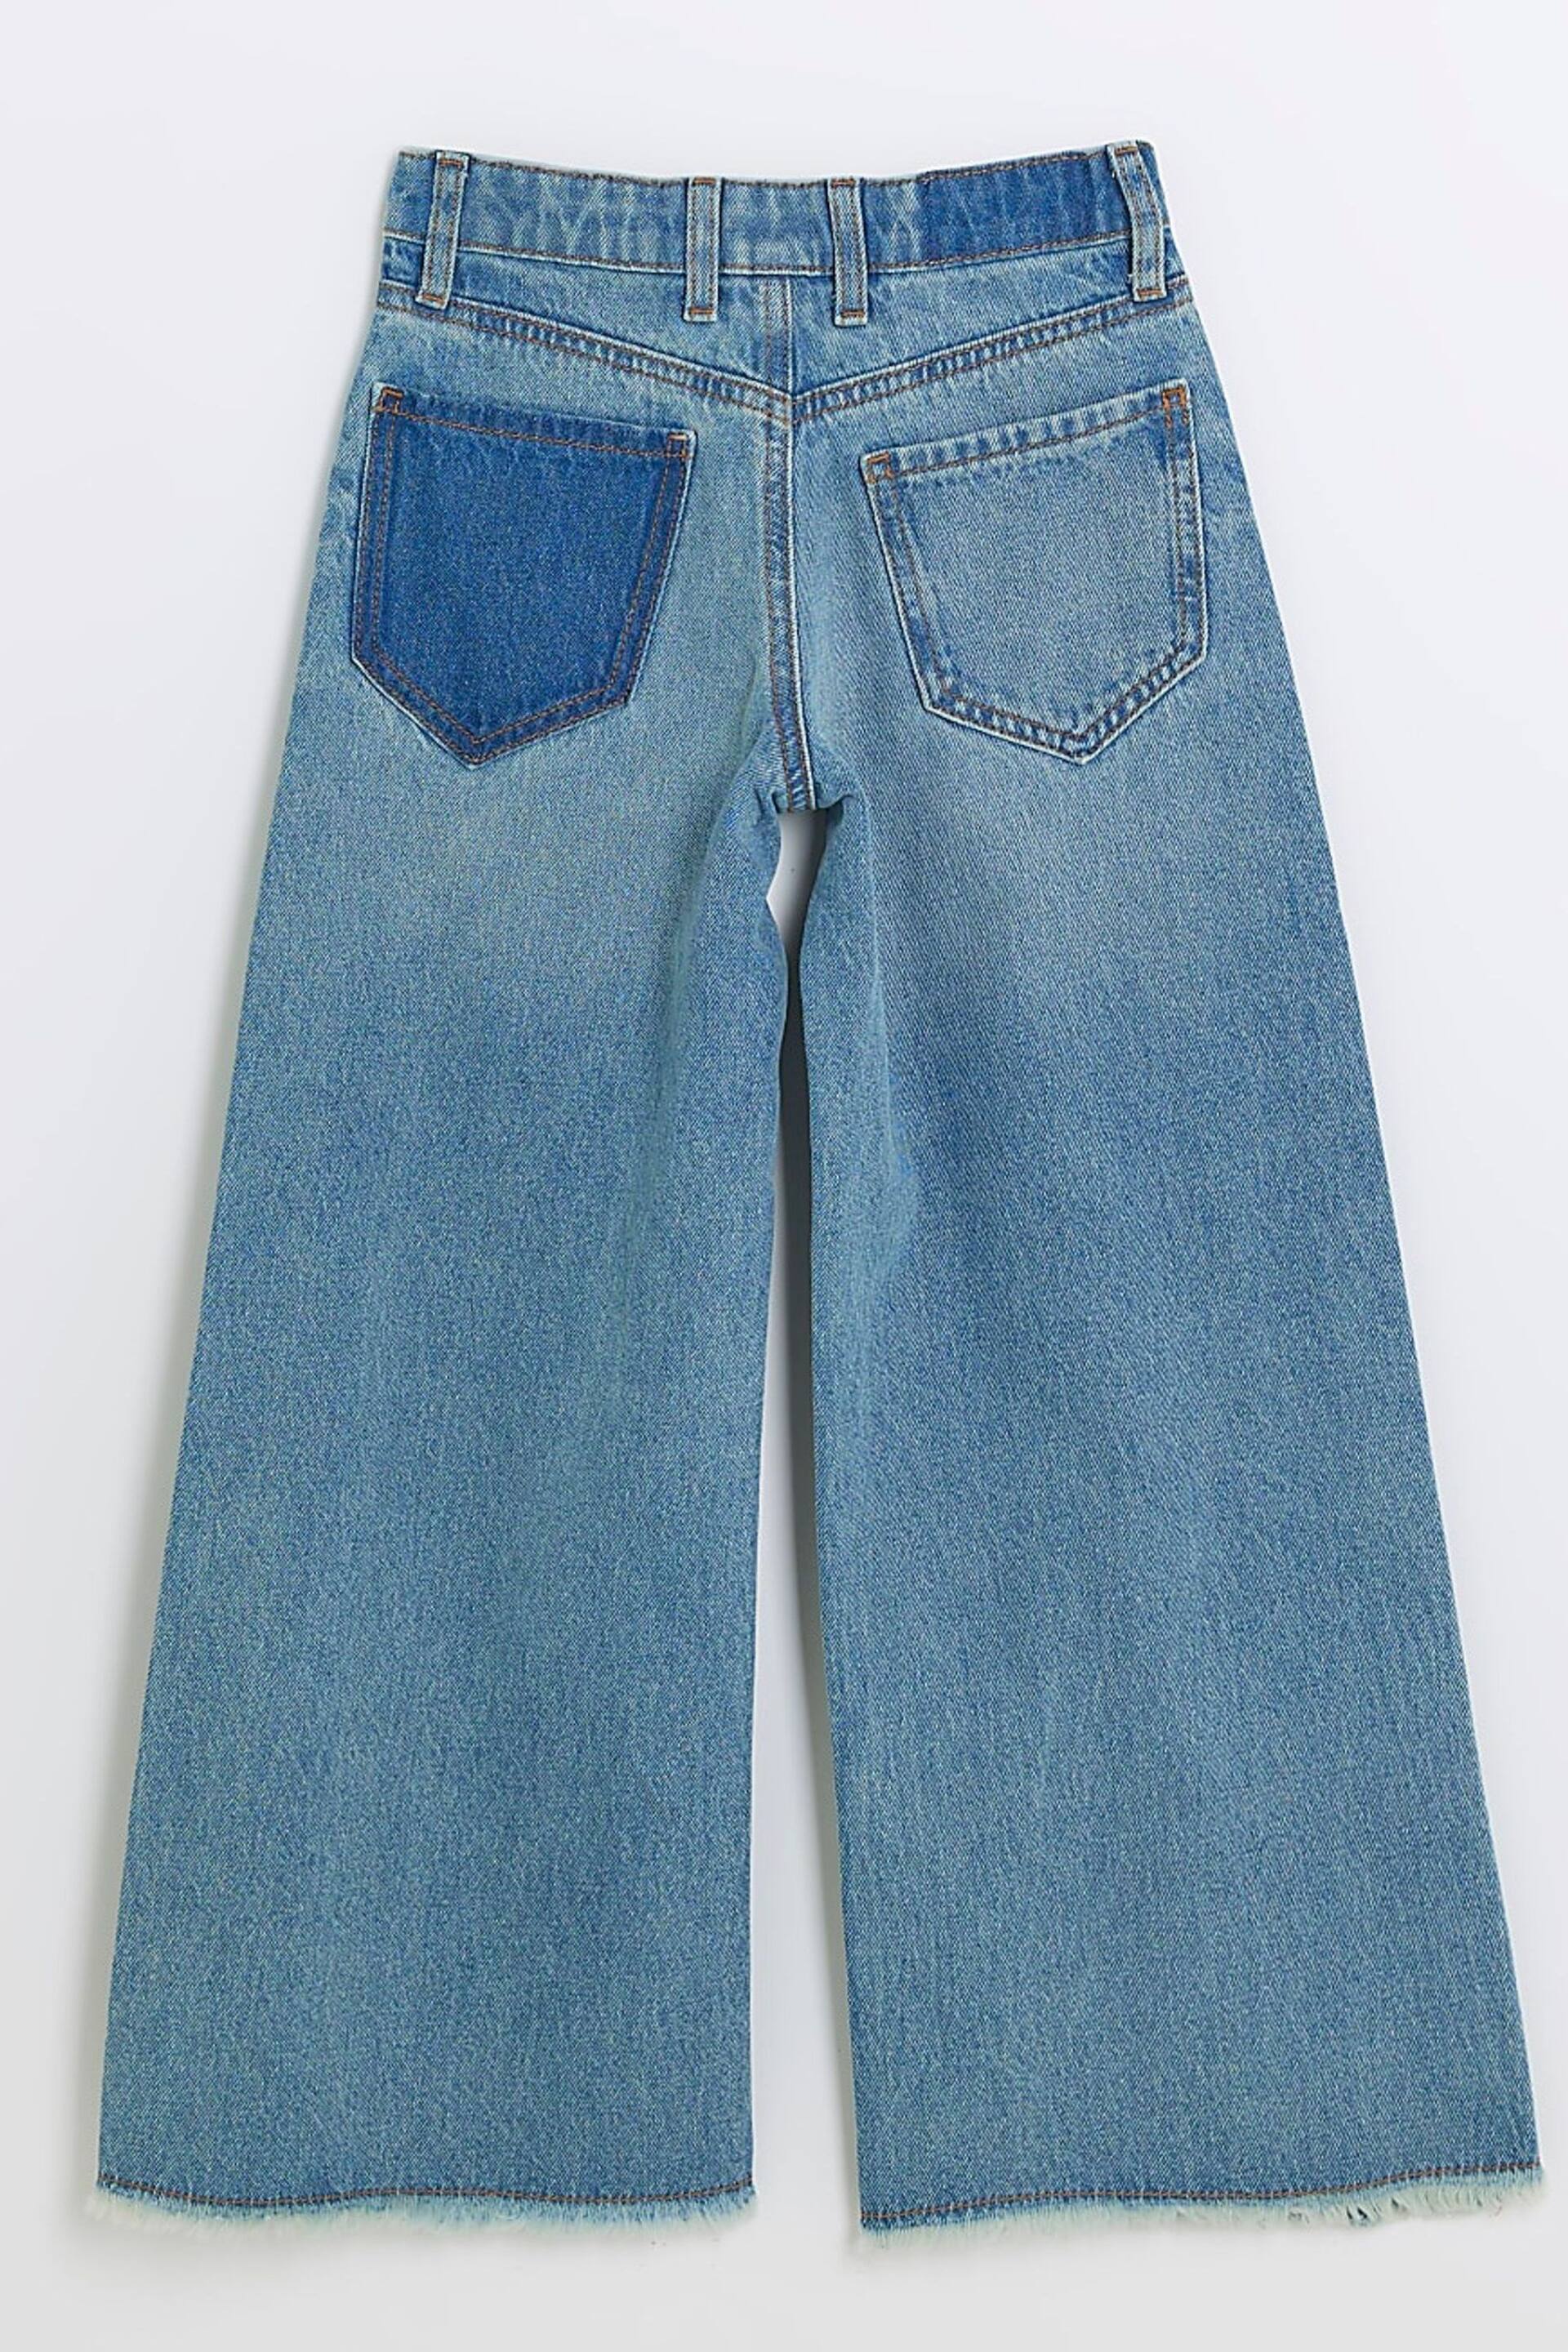 River Island Blue Girls Denim Patchwork Wide Leg Jeans - Image 4 of 6